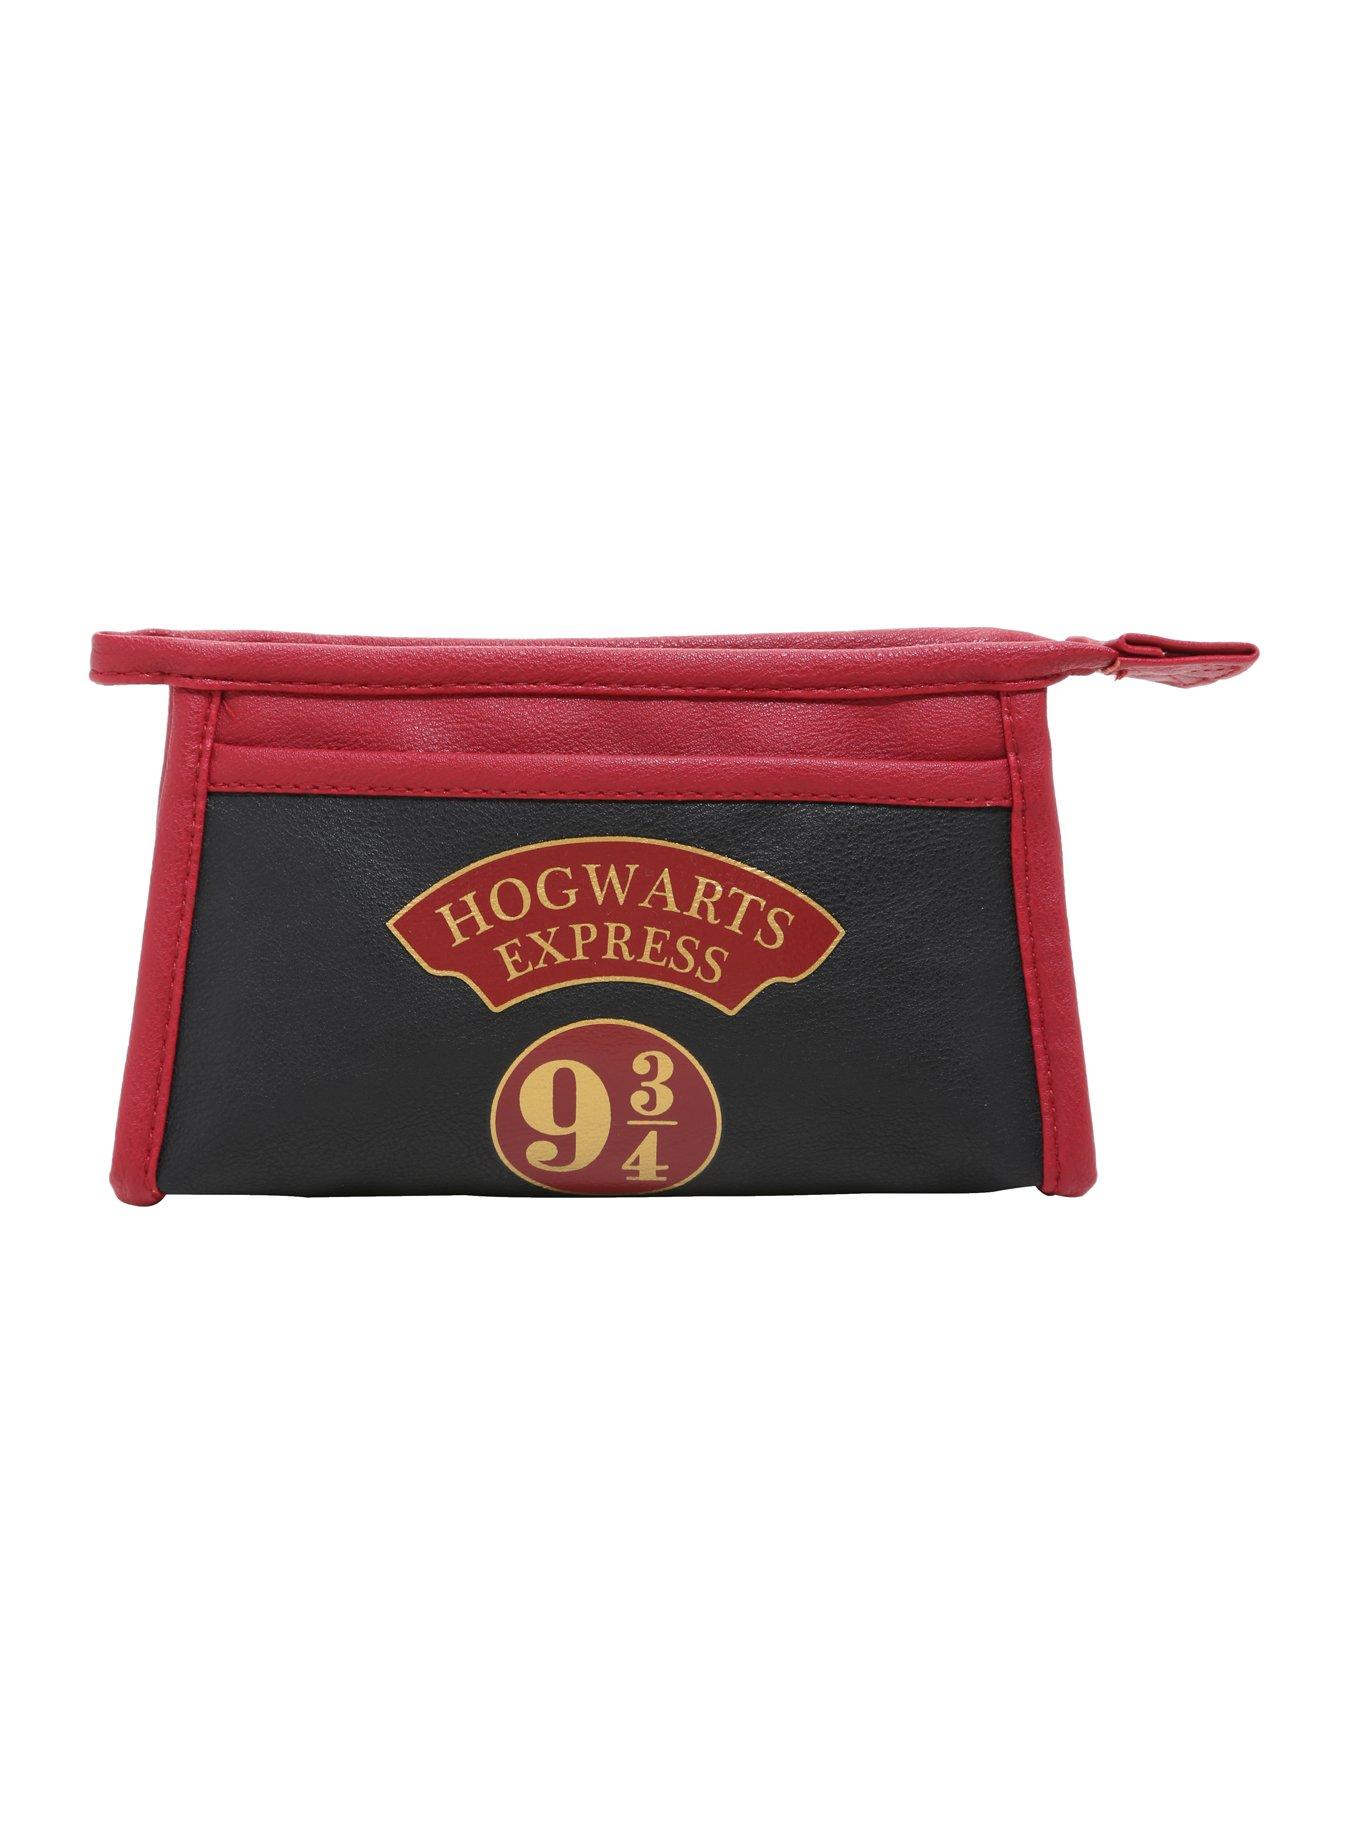 Harry Potter Hogwarts Express 9 3/4 Makeup Bag, , hi-res